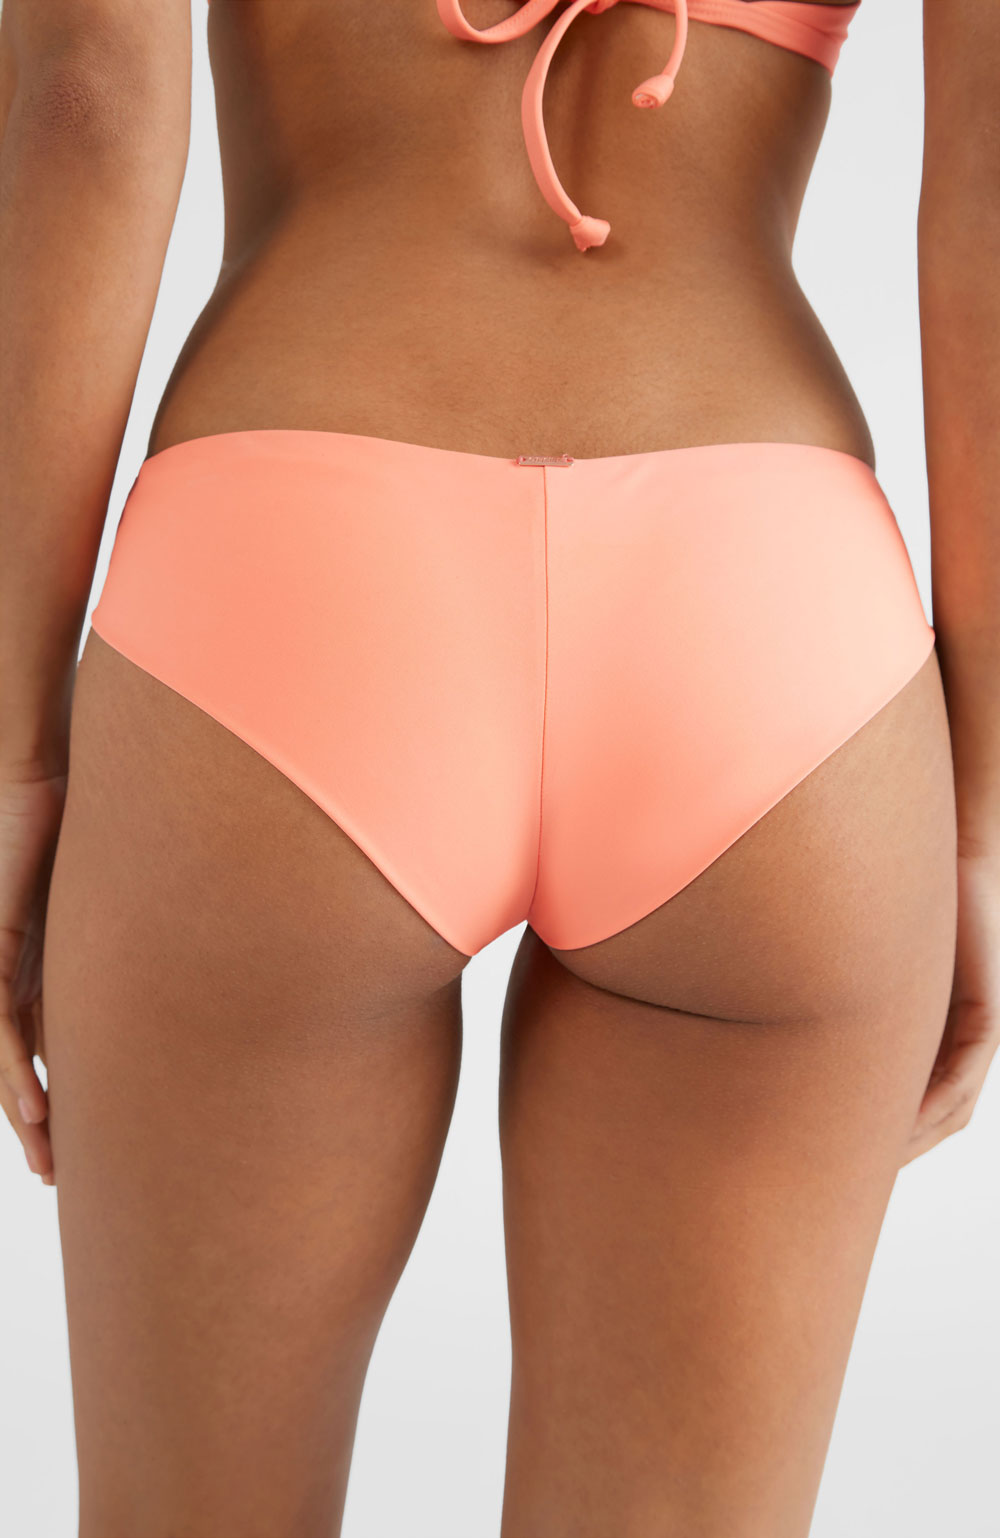 Women's bikini bottoms